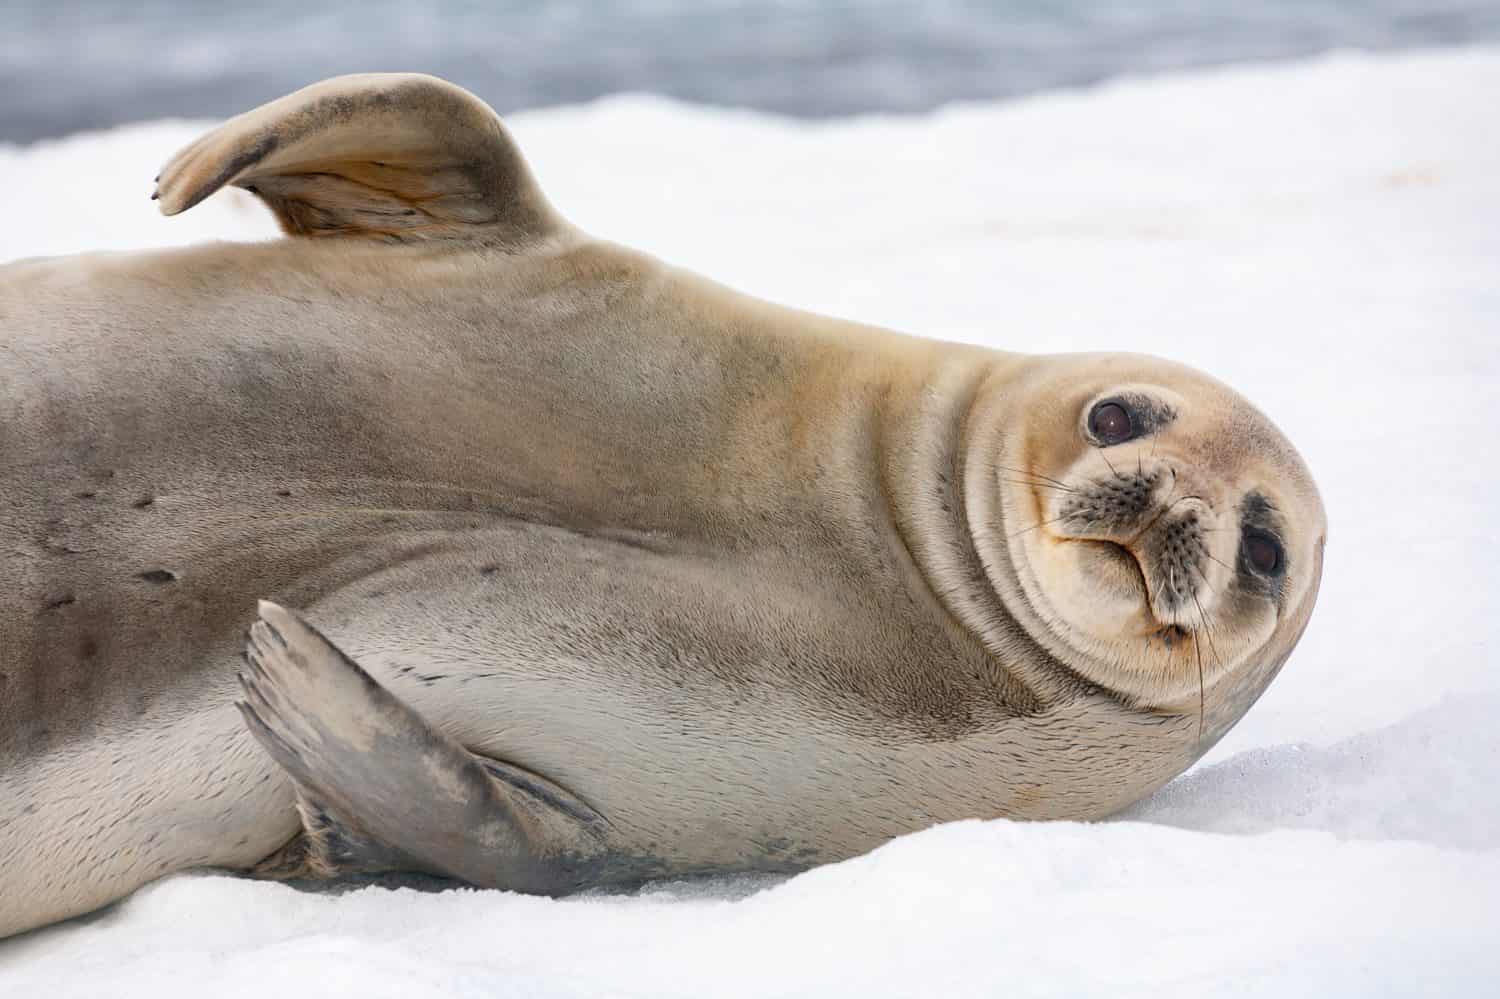 Female Antarctic fur seal (Arctocephalus gazella) on Half Moon Island in the South Shetland Islands, Antarctica.